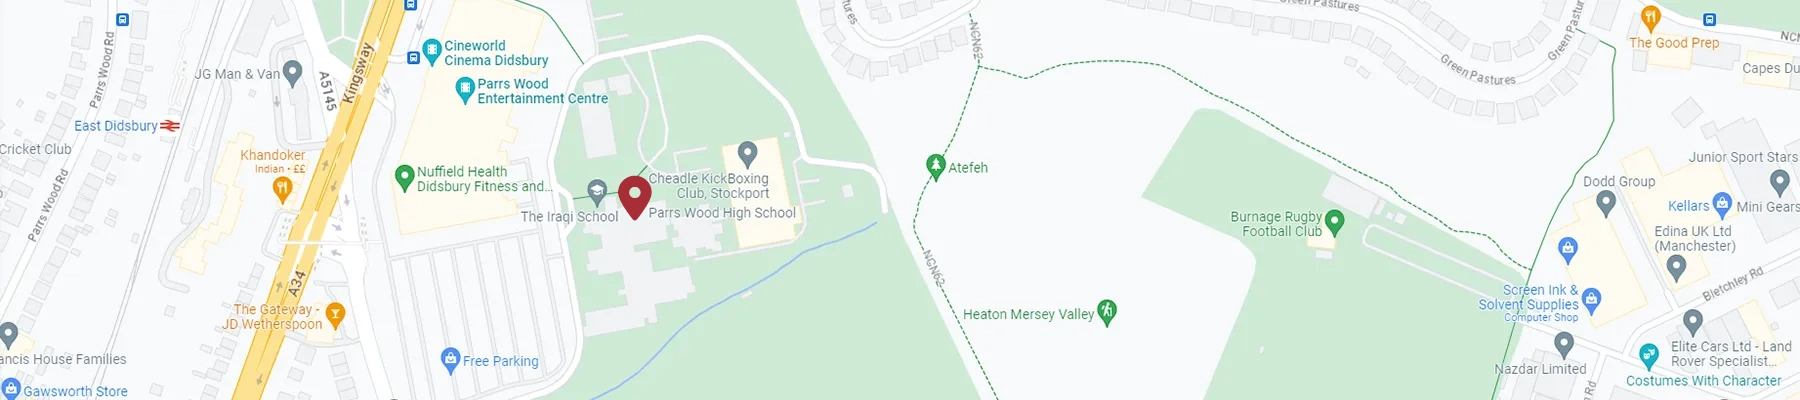 Parrs Wood High School on Google Maps